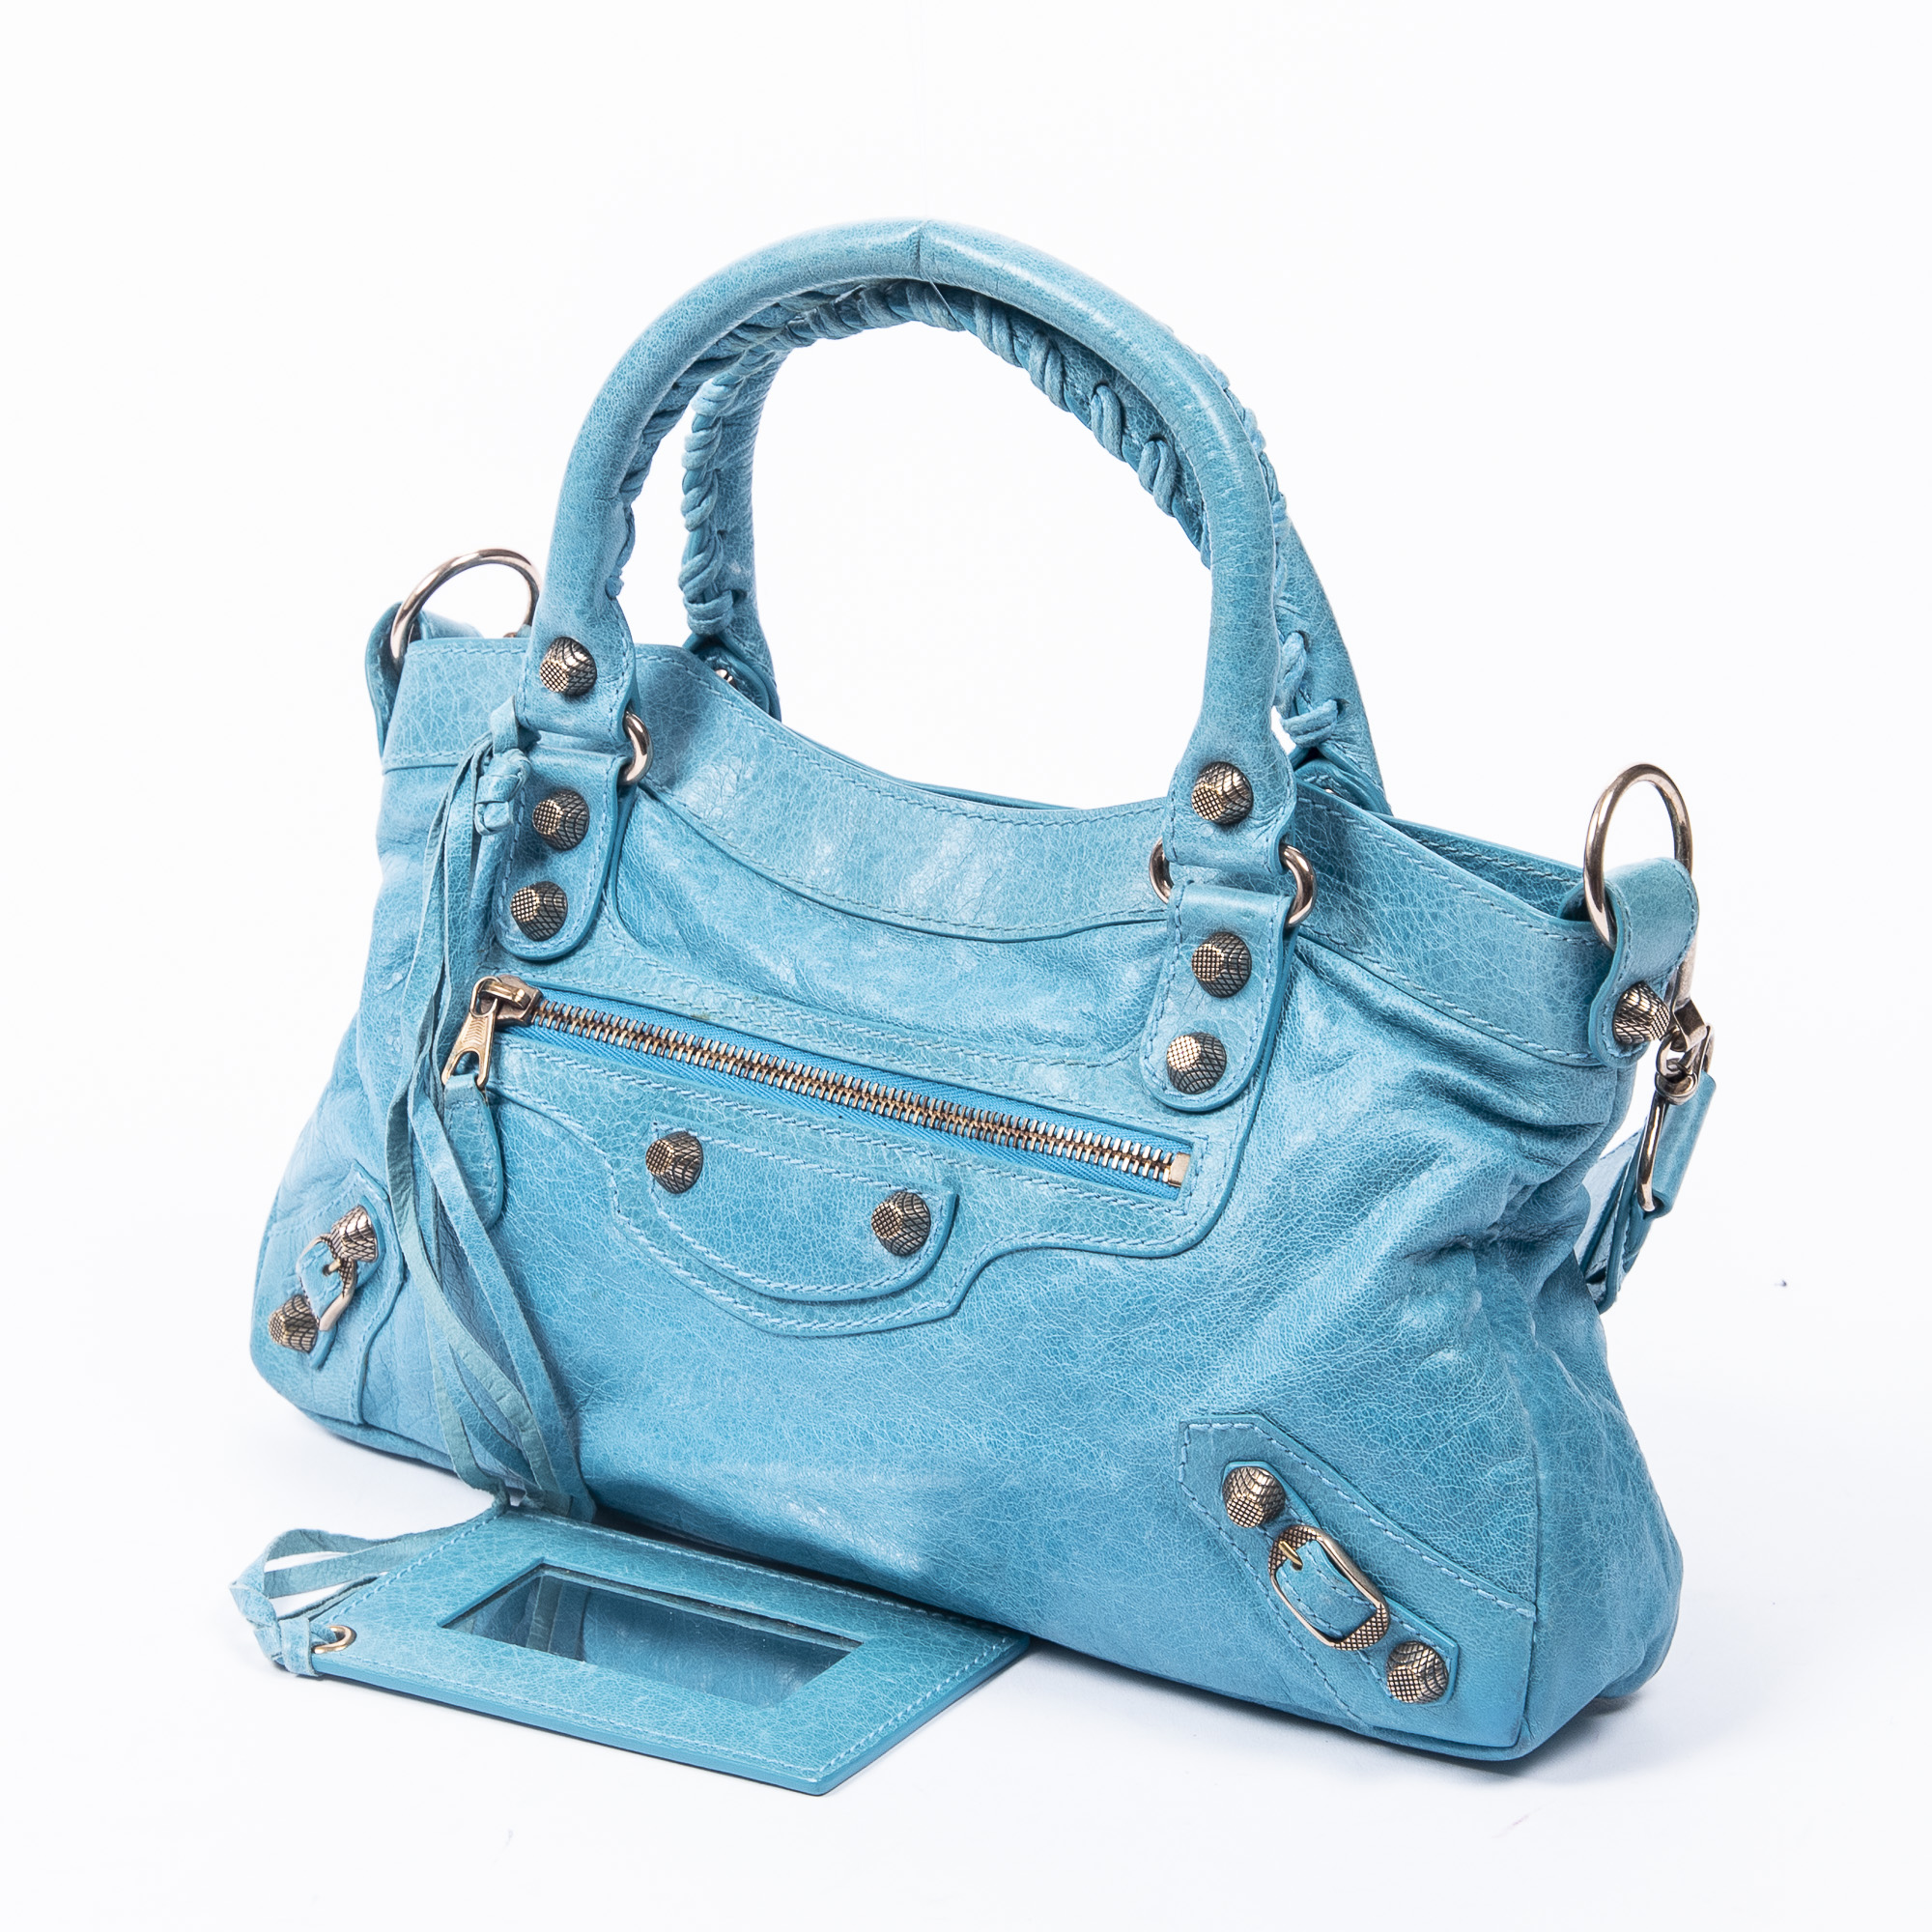 Balenciaga Teal Blue First Bag, gold tone hardware, distressed leather ...